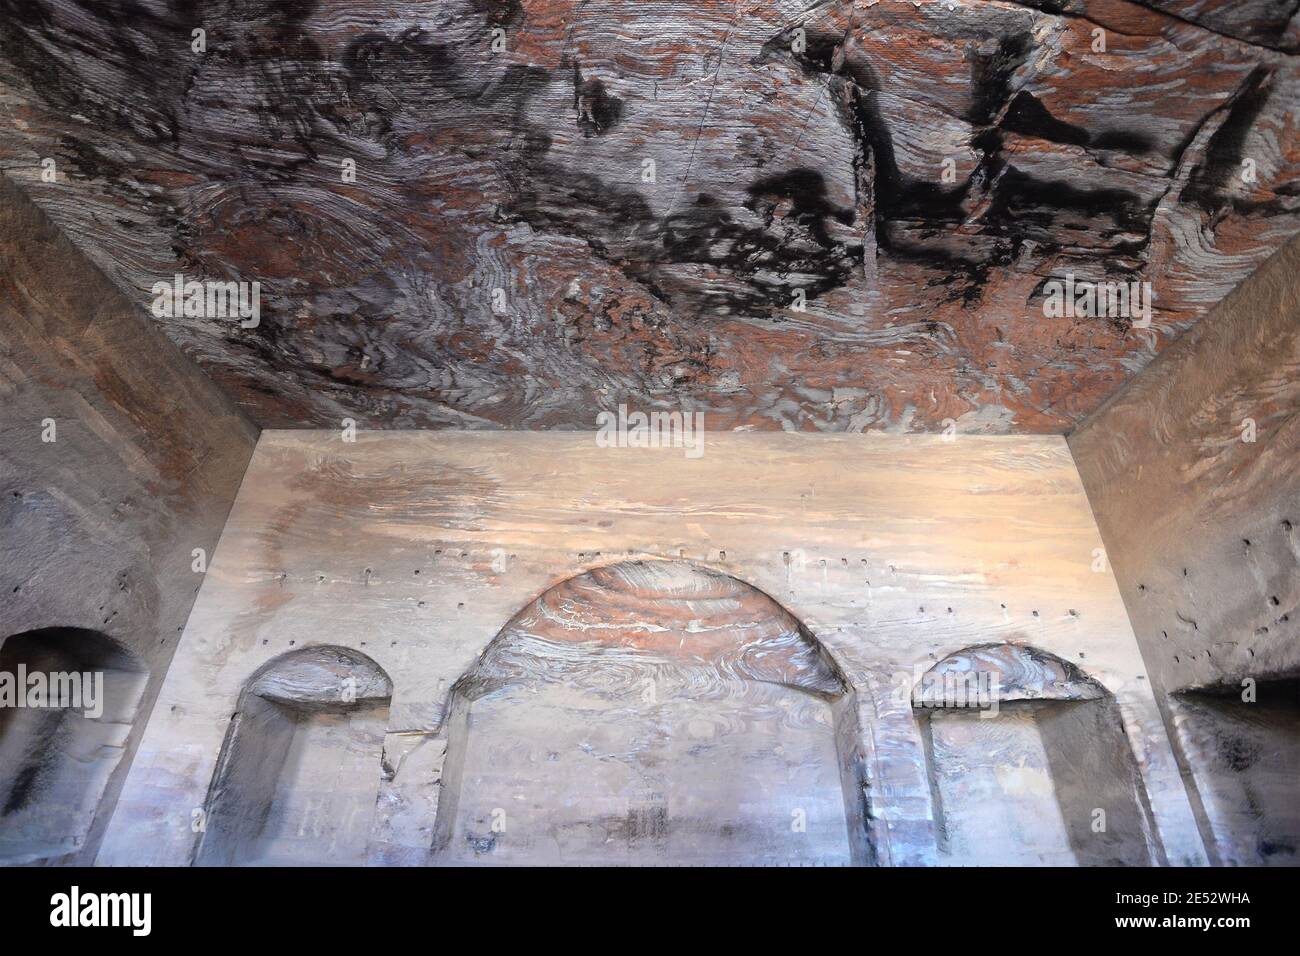 Interior chamber of the Urn Tomb in Petra, Jordan. Stock Photo